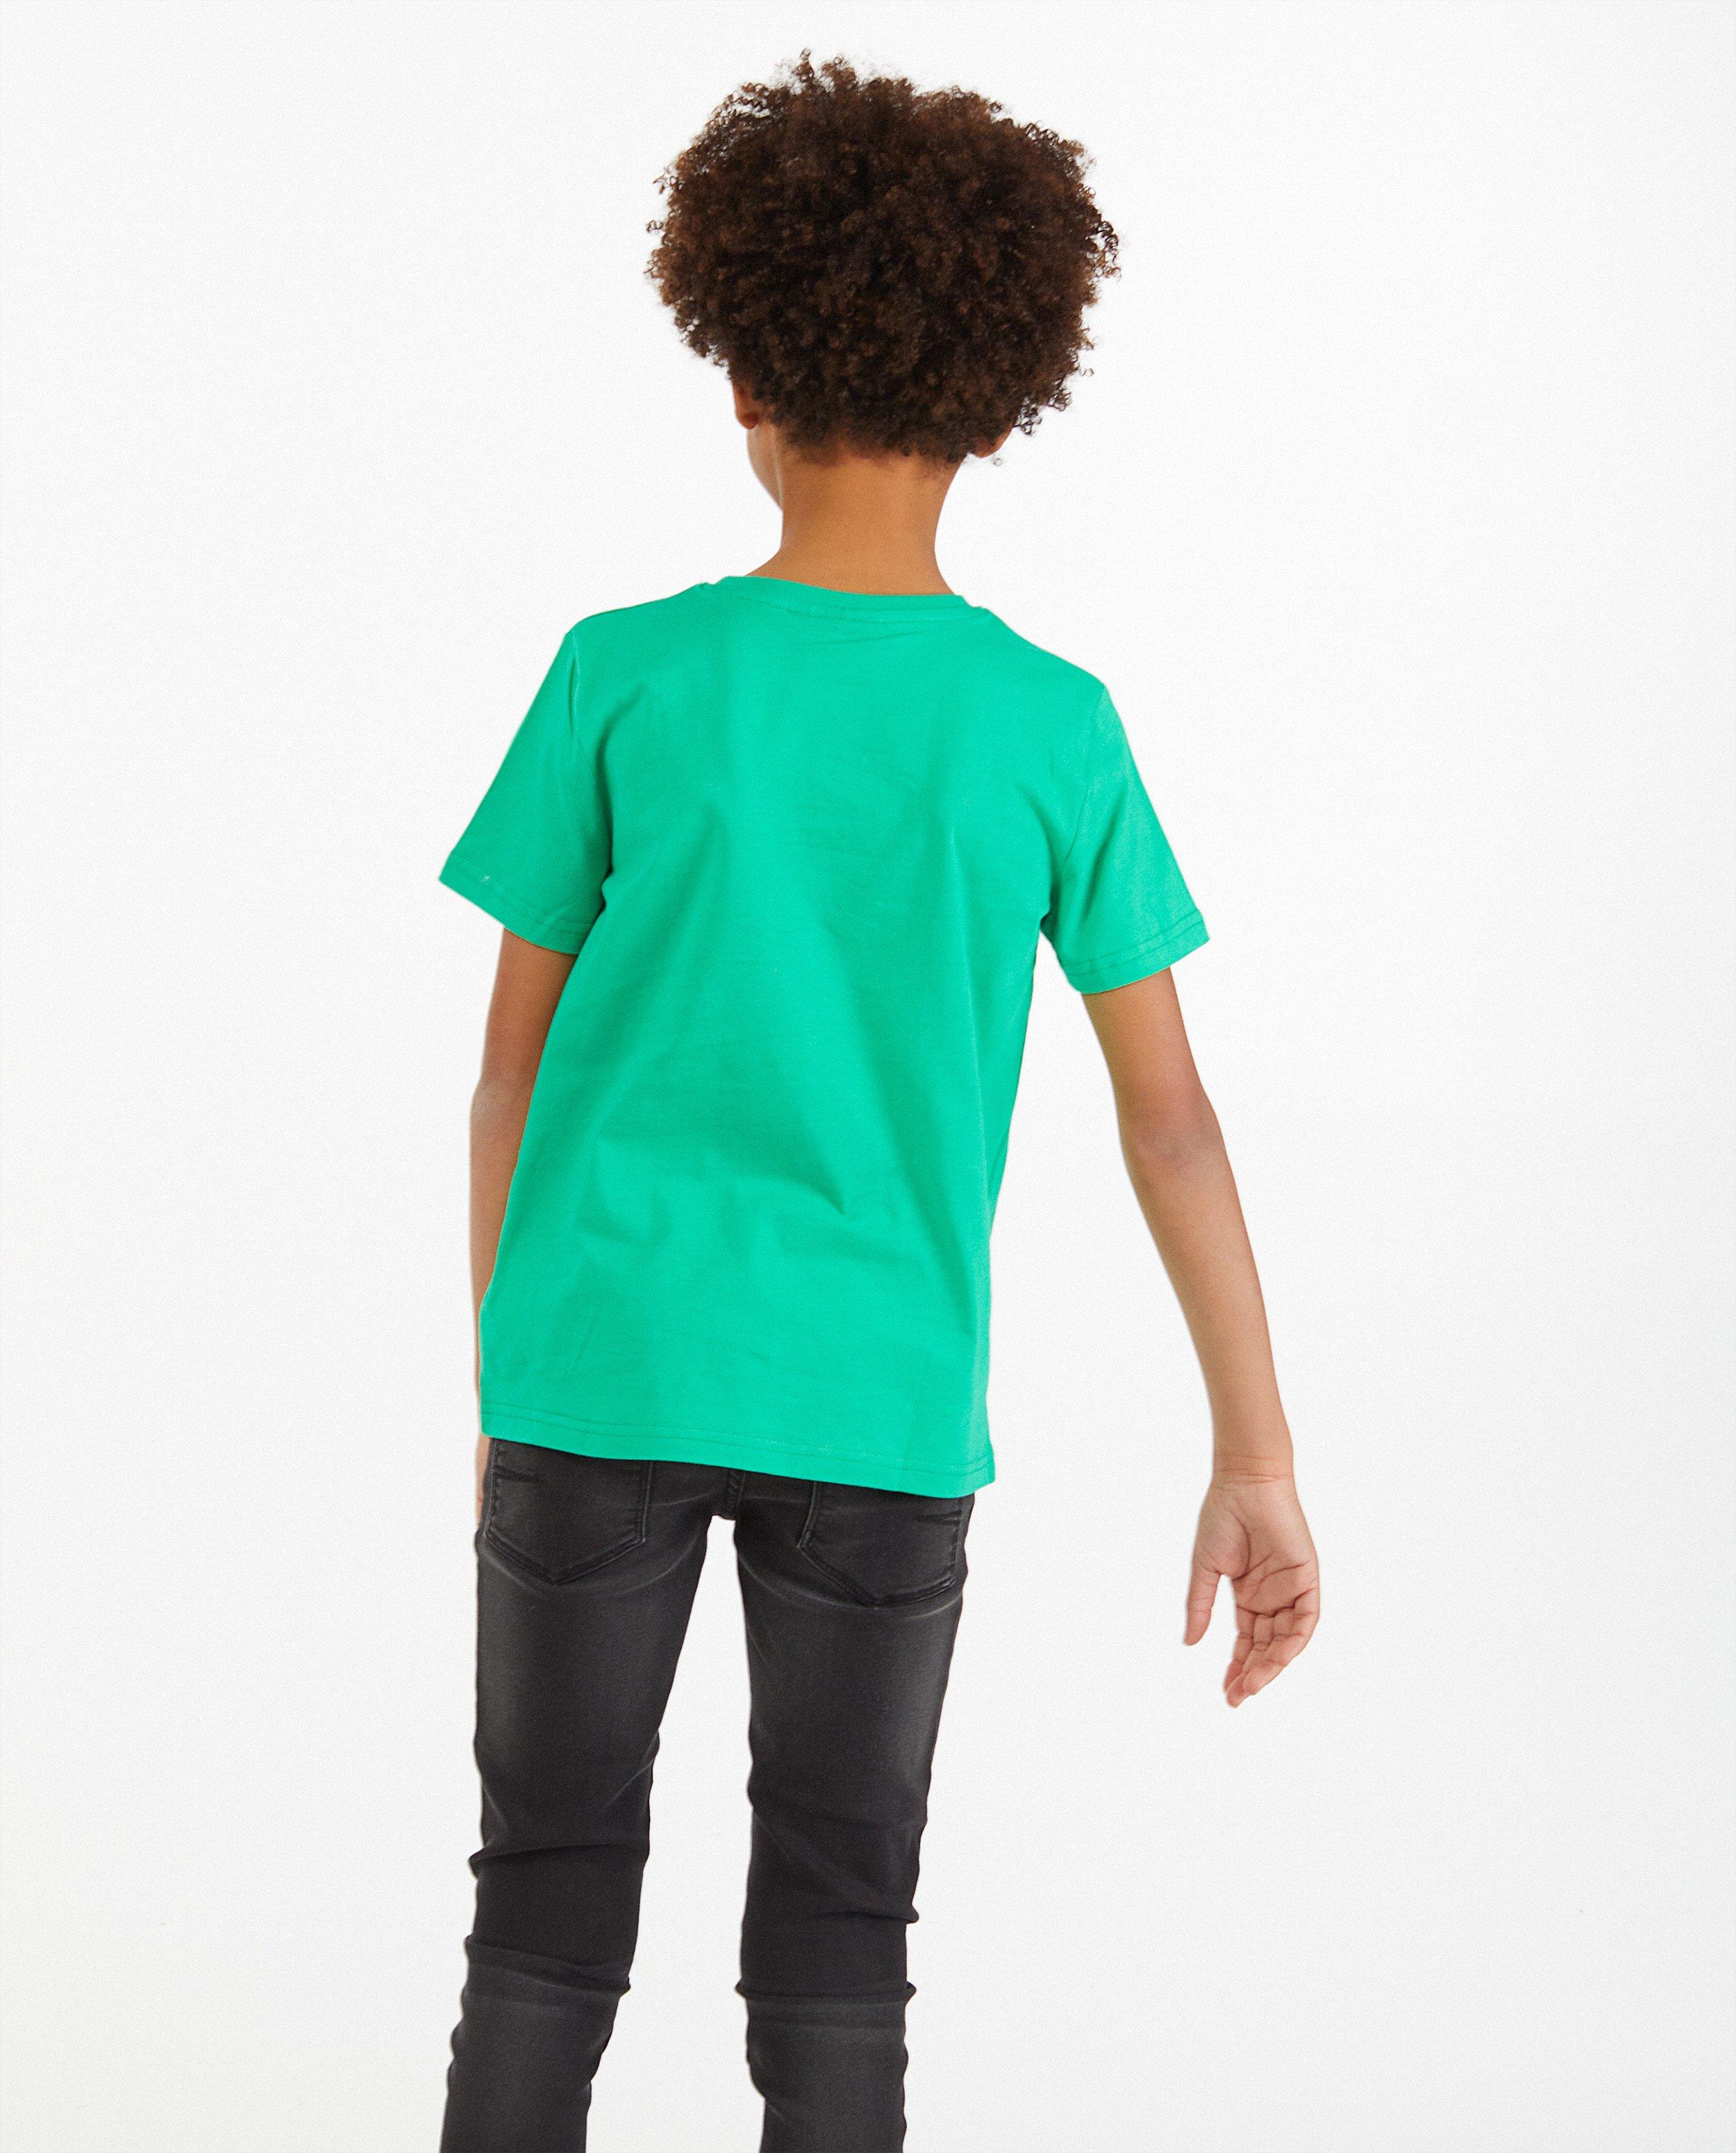 Minecraft T Shirt Pour Enfants Bebes Noir Vert Motif Mechants Famille Bebe Bebe Garcon 0 24m Bilkvarteret Bebe